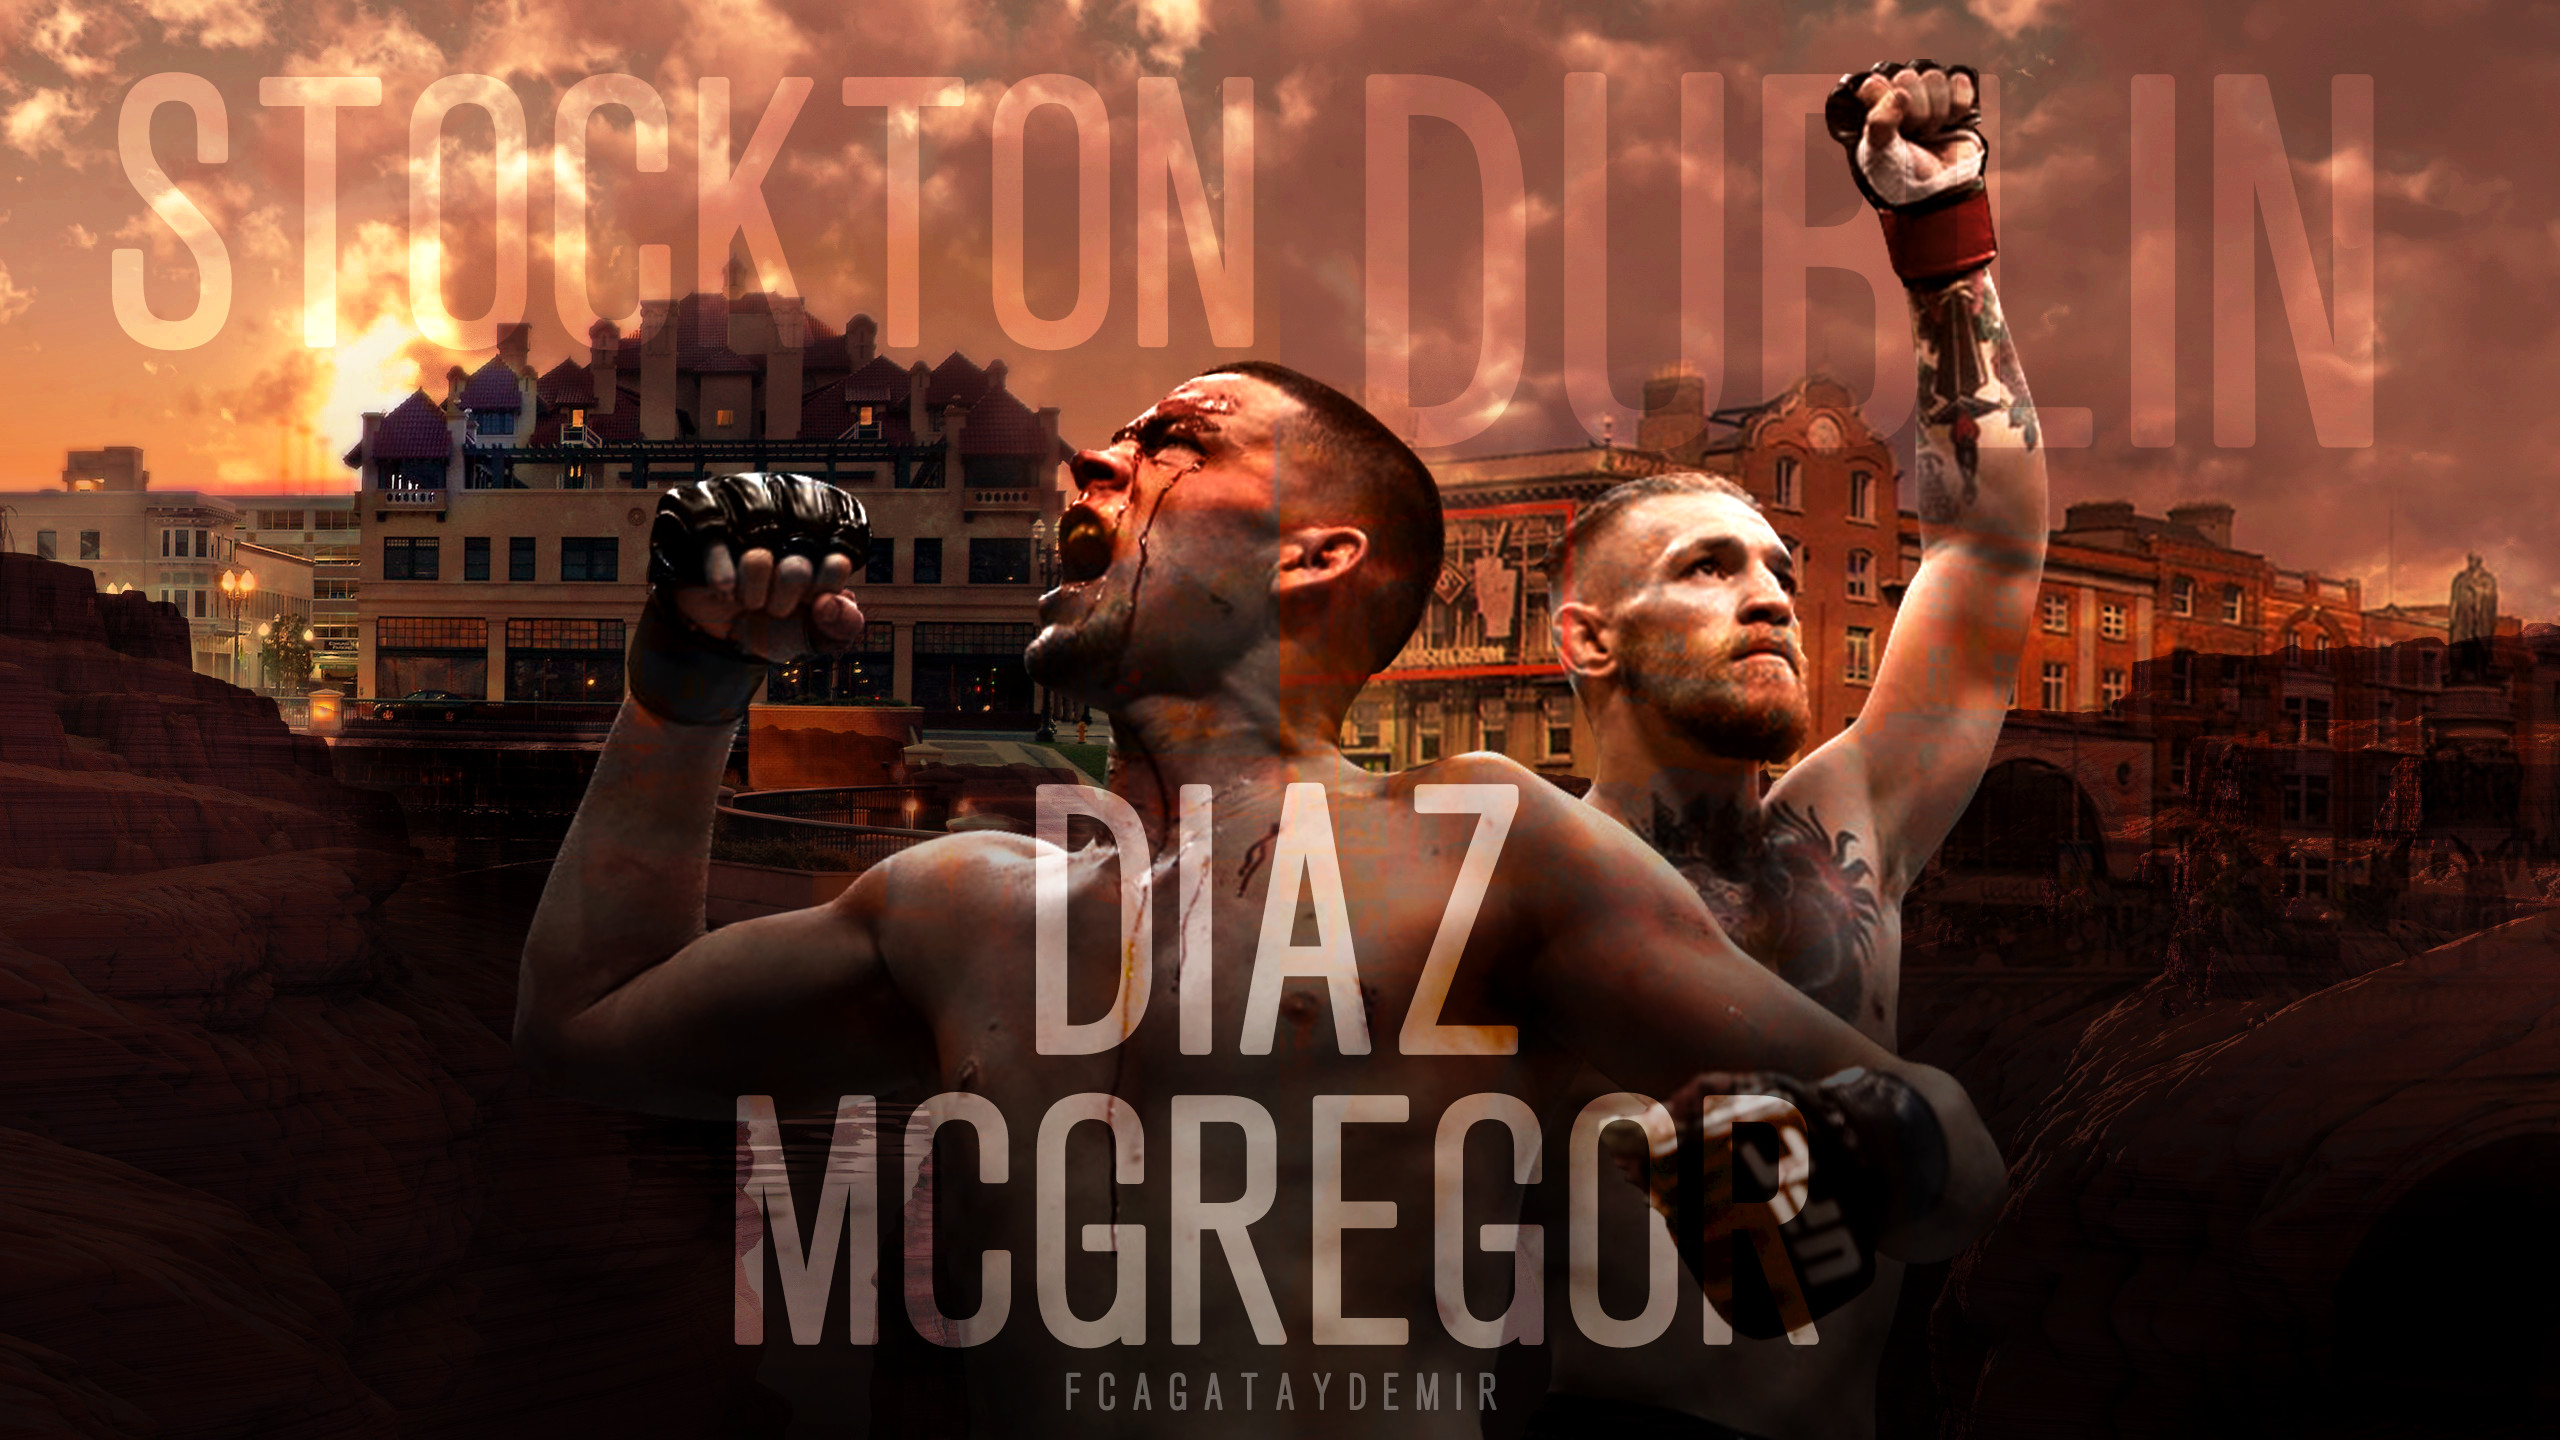 2560x1440 ... NATE DIAZ x CONOR MCGREGOR 2 | UFC 202 (2K) by CagatayDemir